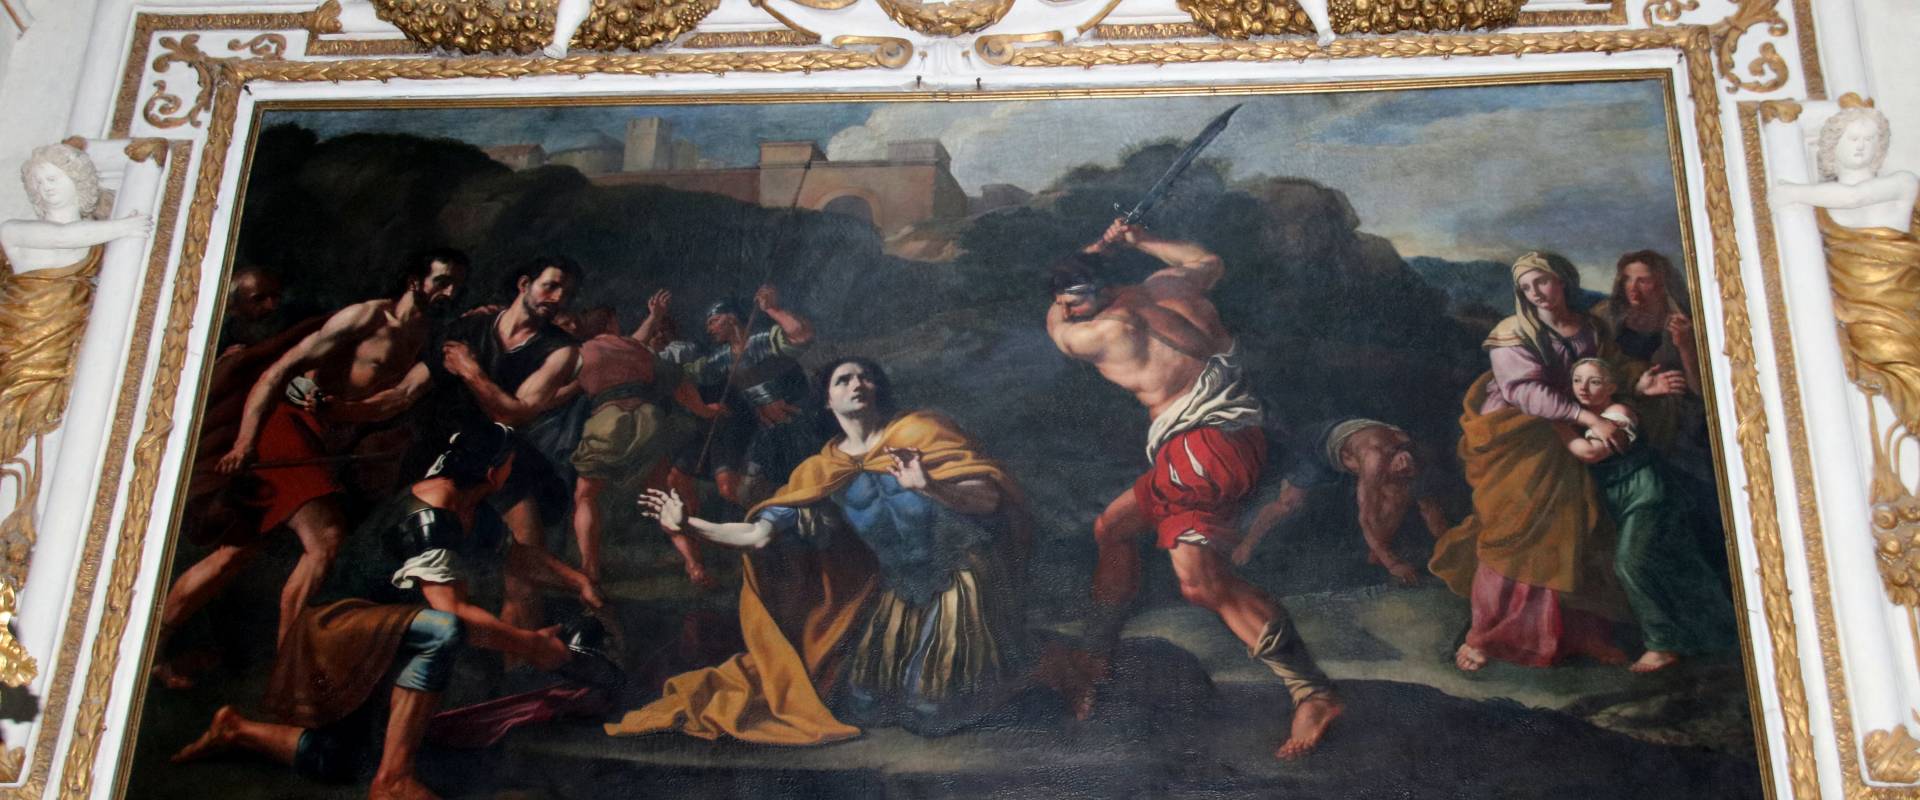 Robert la Longe, Storie di Sant'Antonino (1693) 07 photo by Mongolo1984